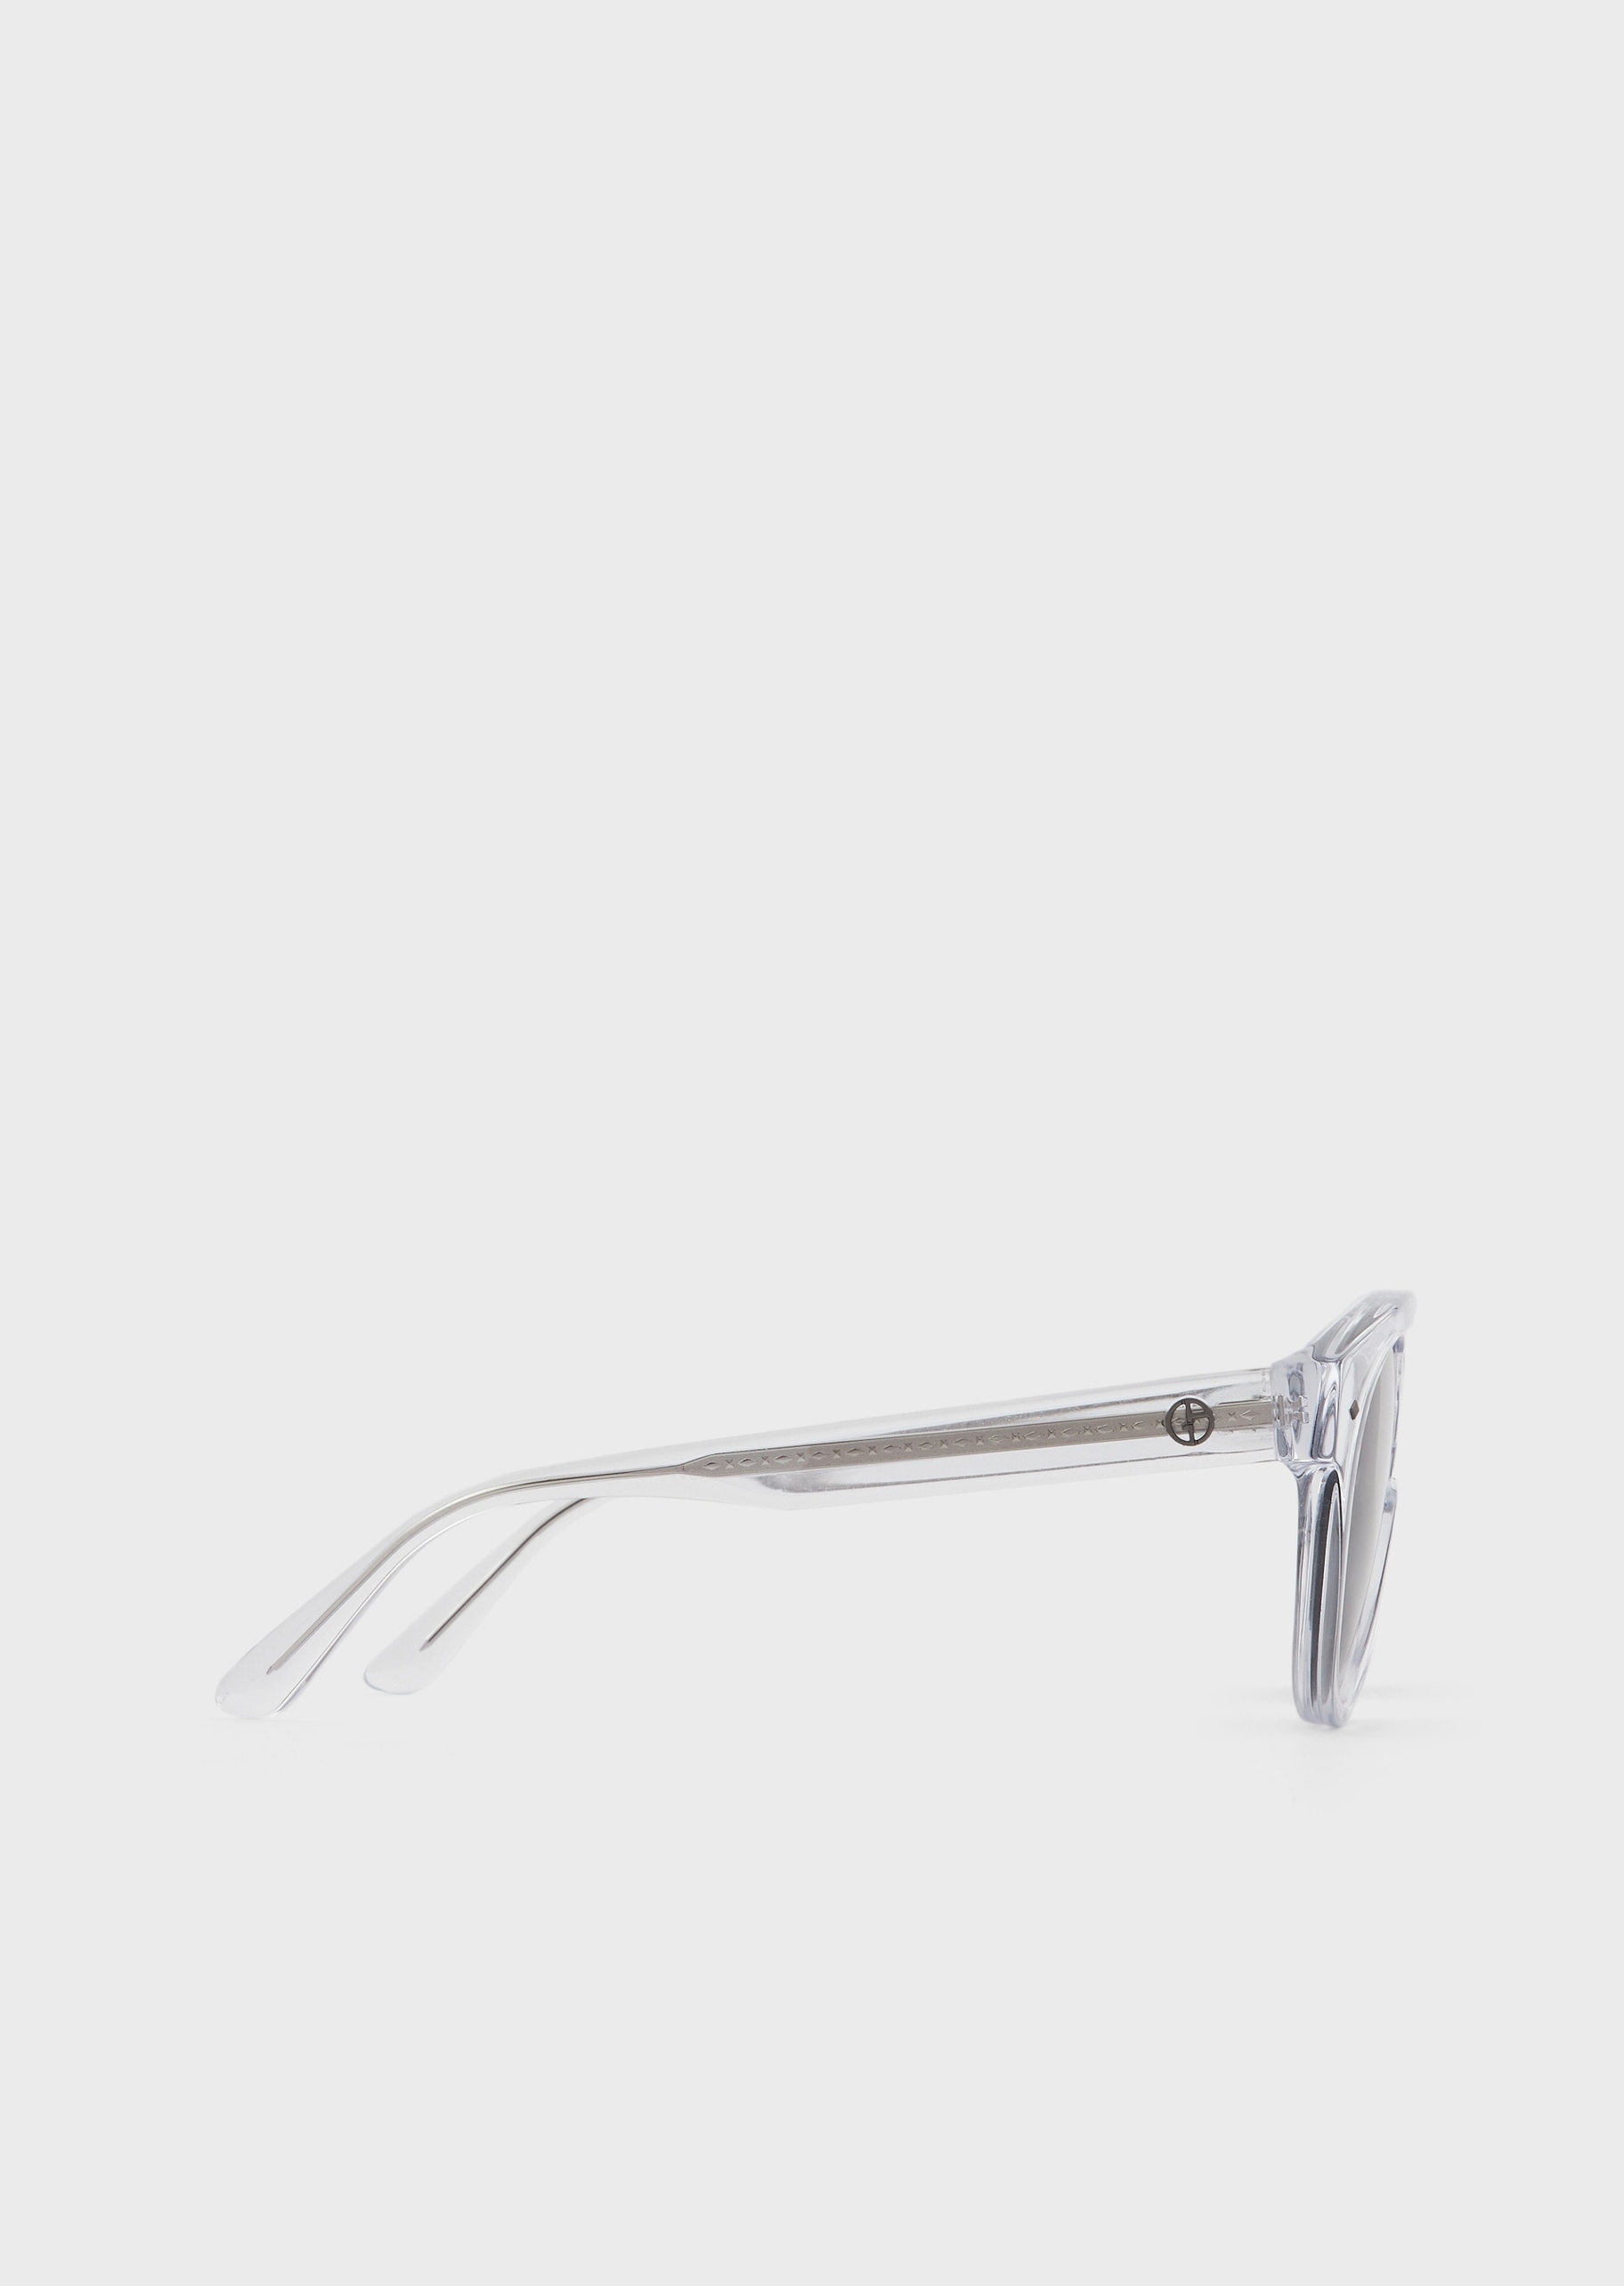 Giorgio Armani 时尚潮酷太阳镜